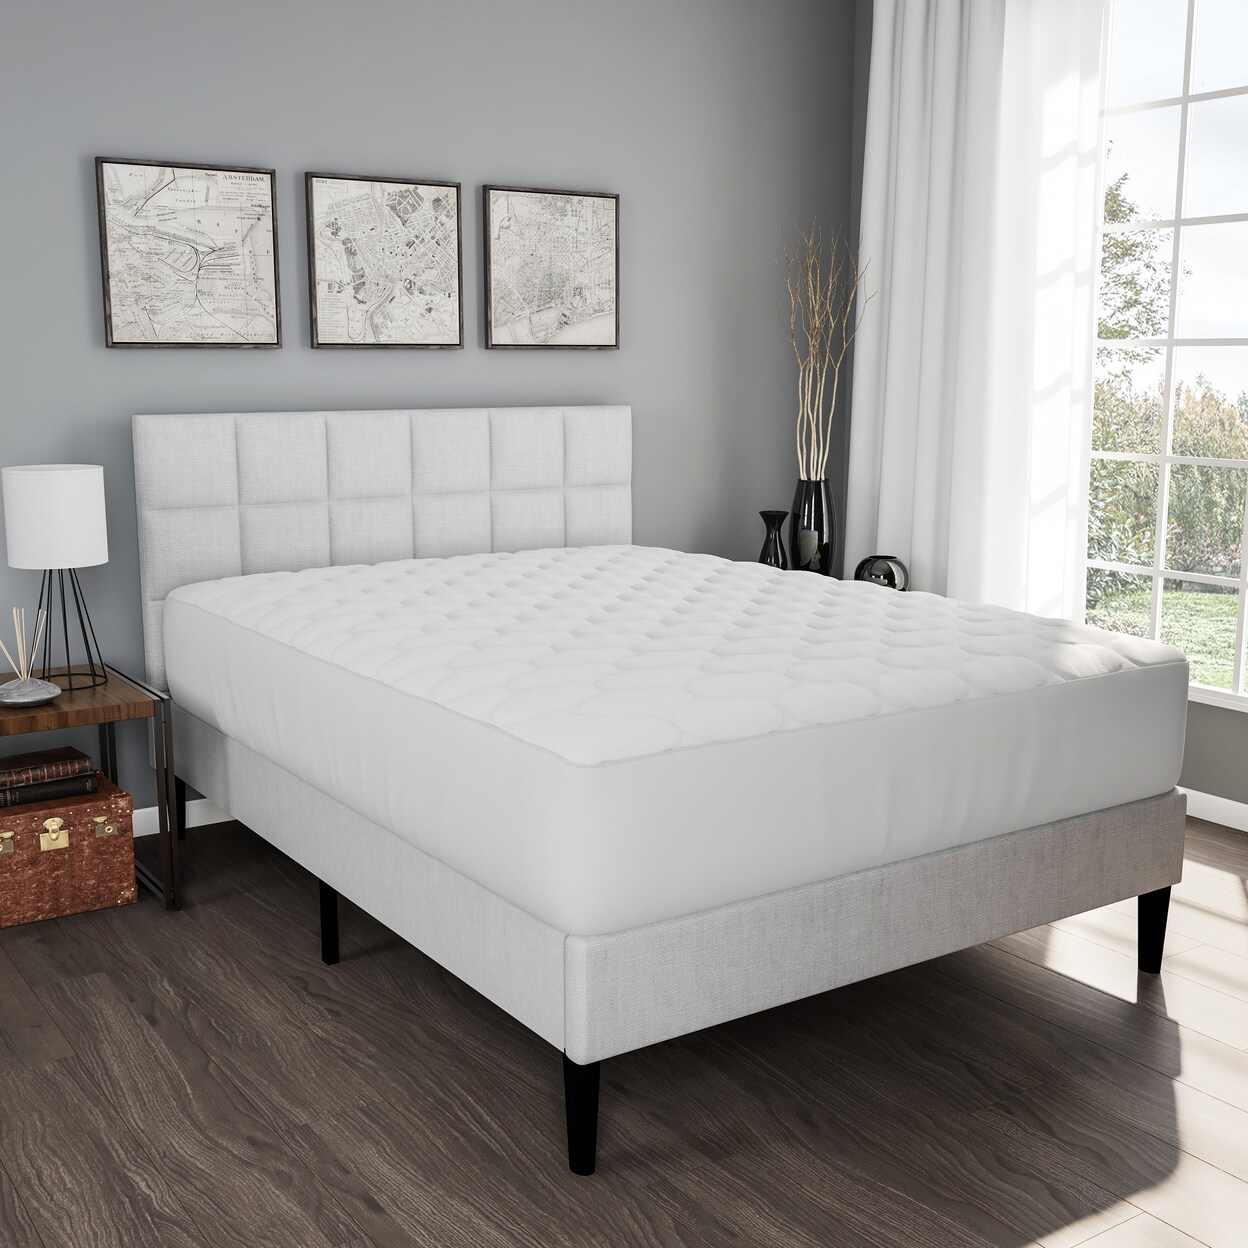 Lavish Home Cotton Cover Fitted Mattress Pad Bed Protector No Slip Elastic Edge Corners